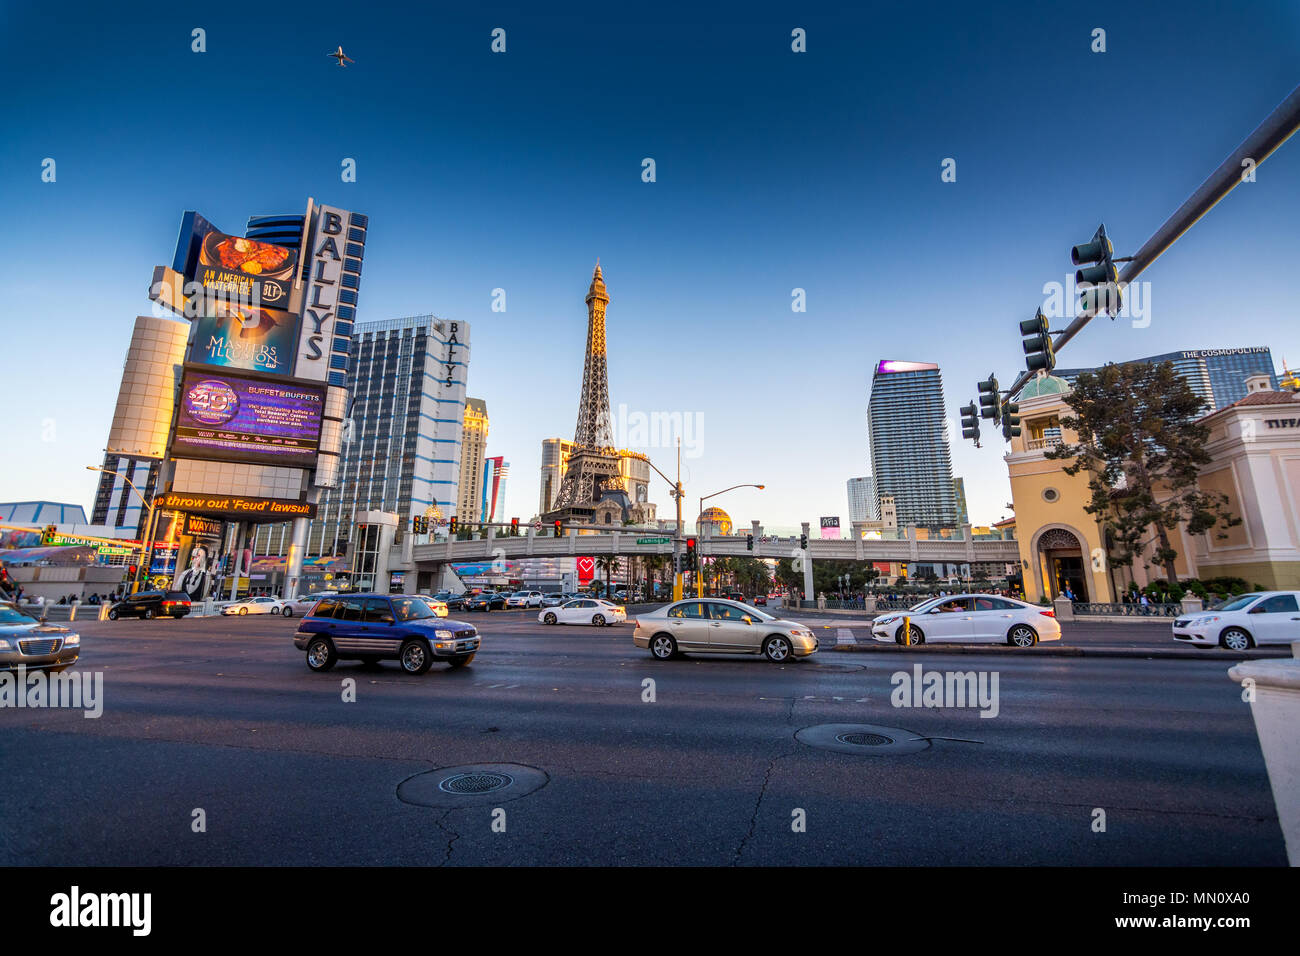 Las Vegas, US - April 28, 2018: Tourtists and traffic on Las vegas boulevard as seen at dusk Stock Photo